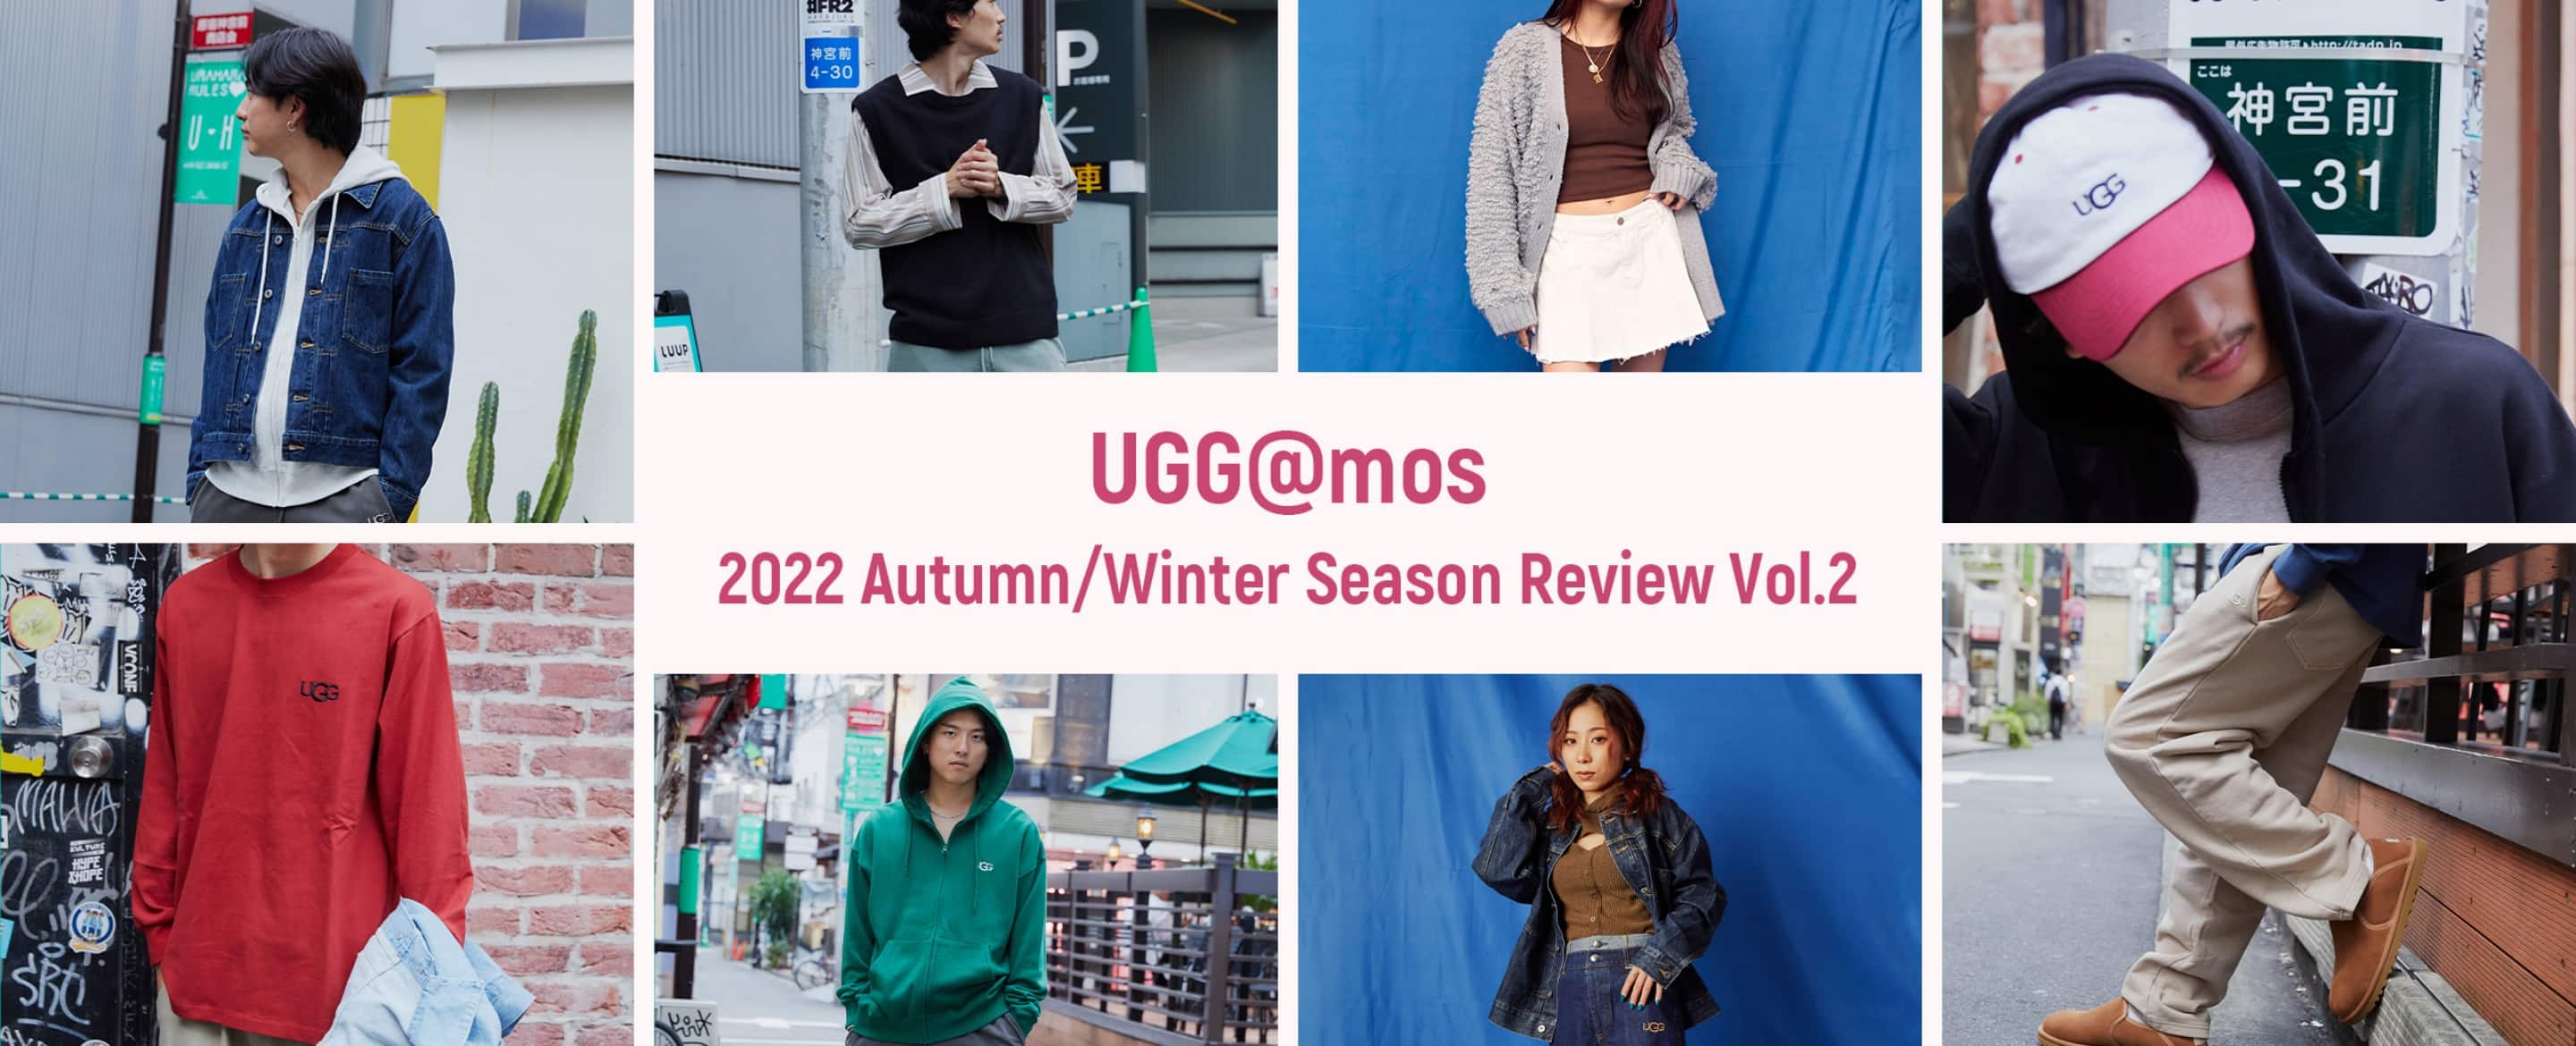 UGG@mos 2022 Autumn/Winter Season Review Vol.2